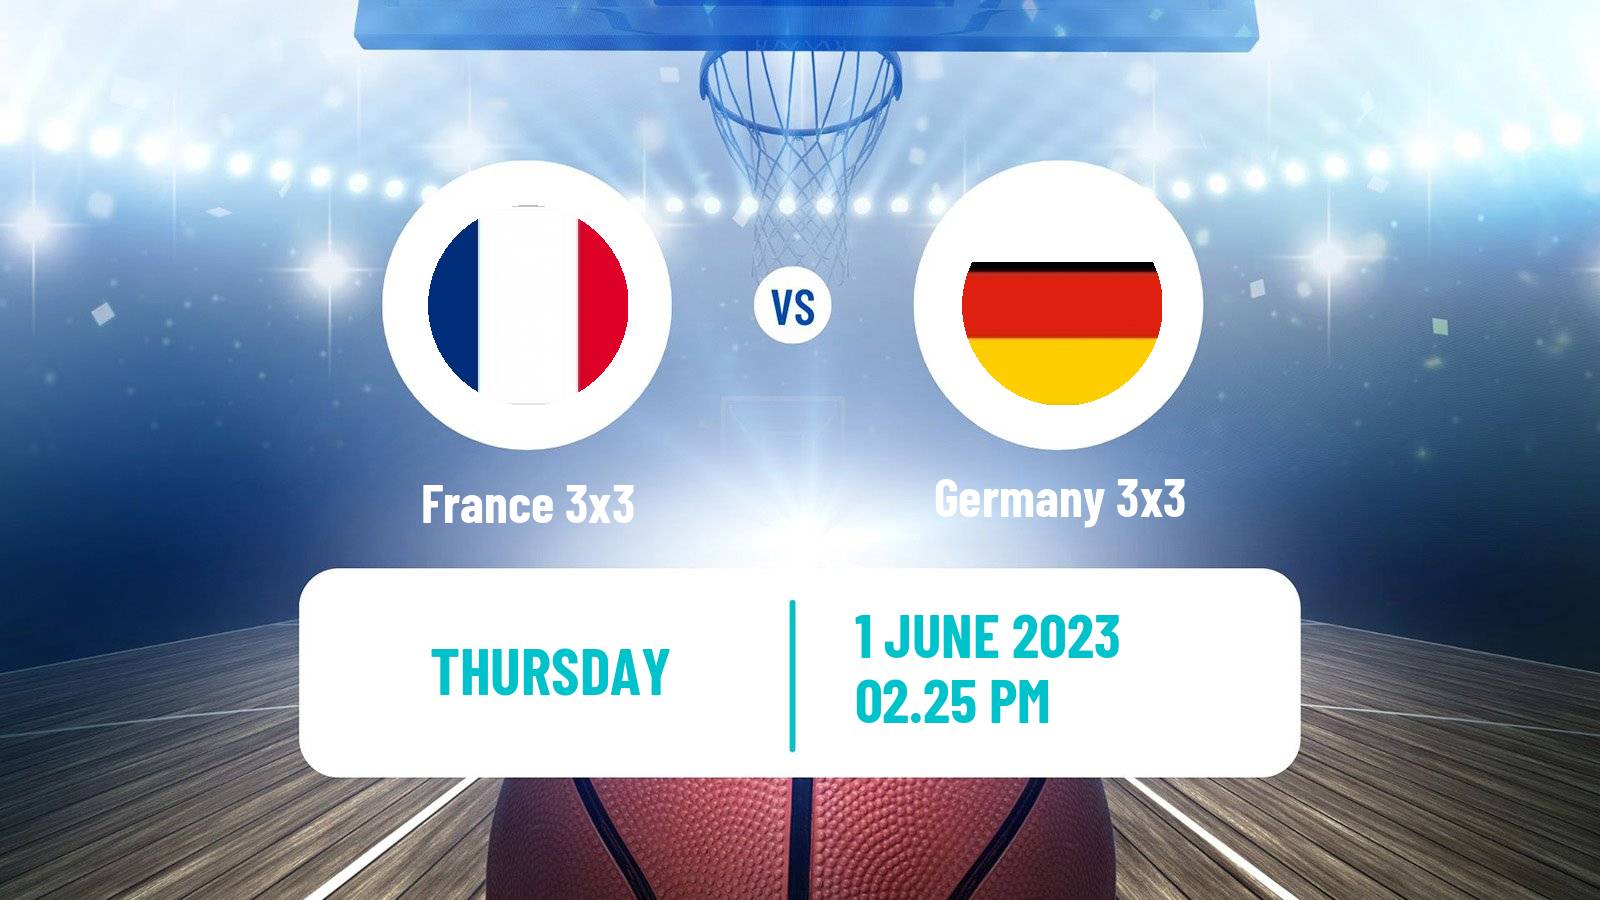 Basketball World Cup Basketball 3x3 France 3x3 - Germany 3x3